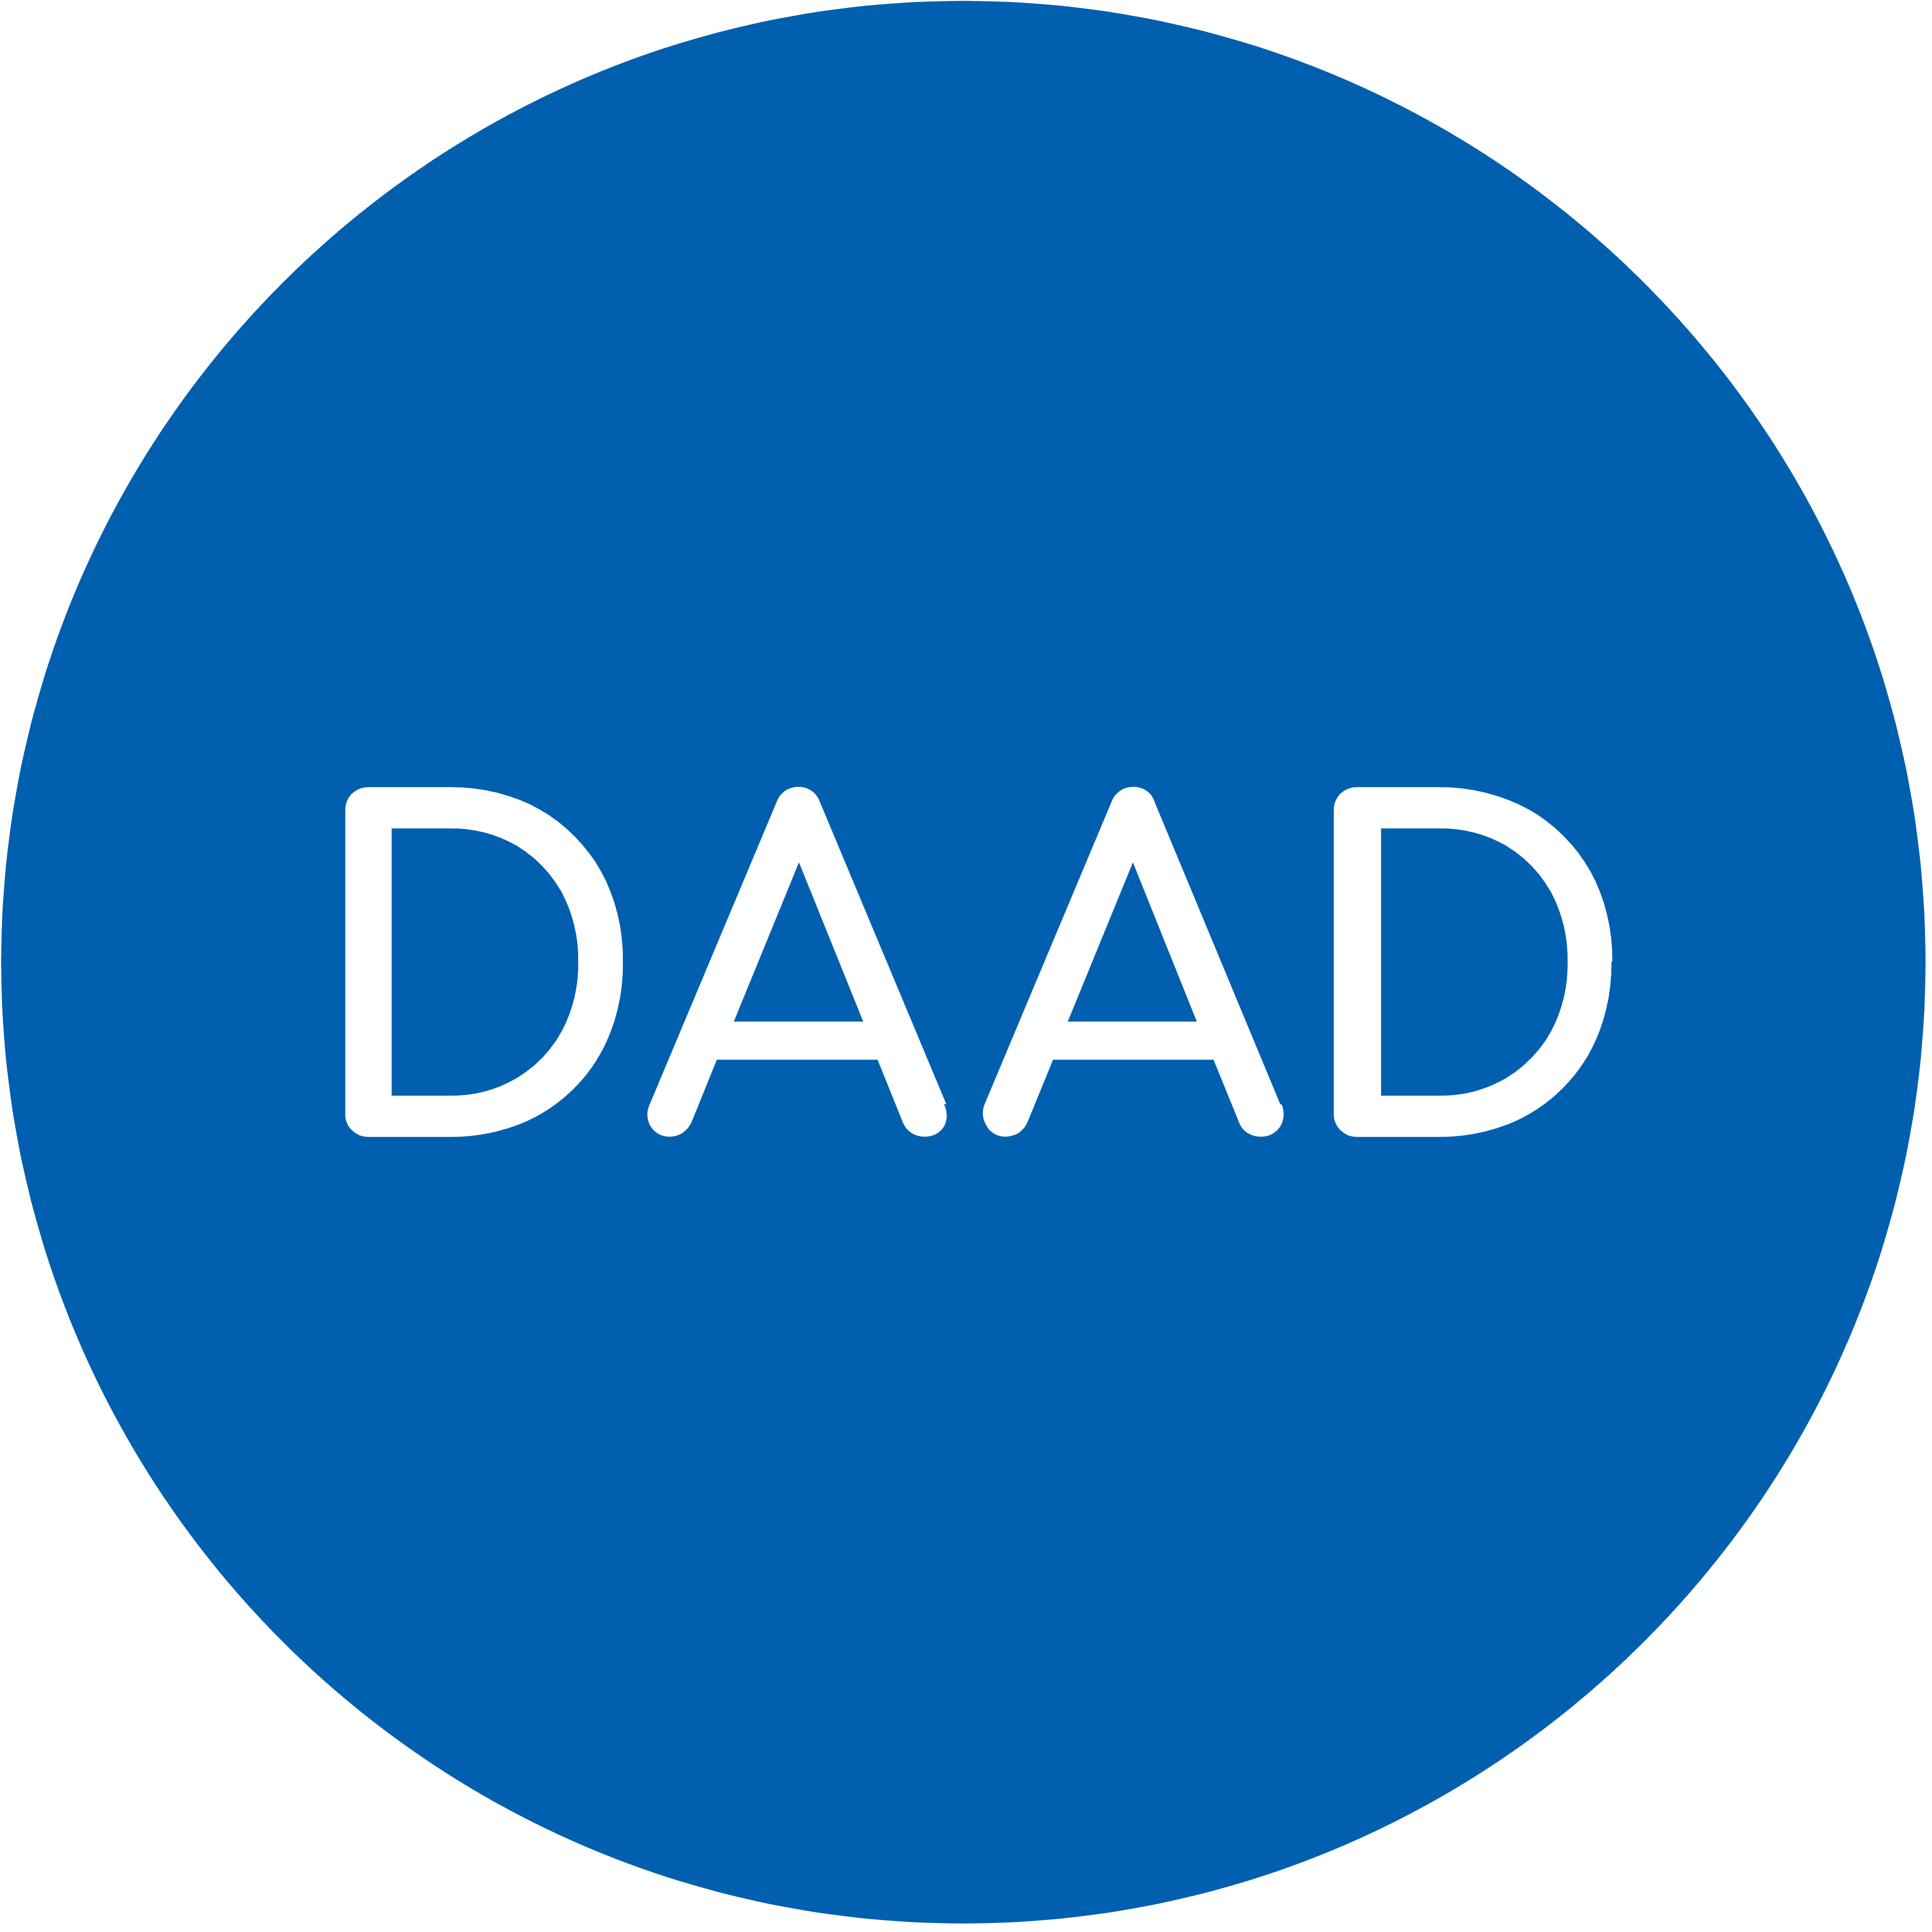 DAAD - German Academic Exchange Service logo